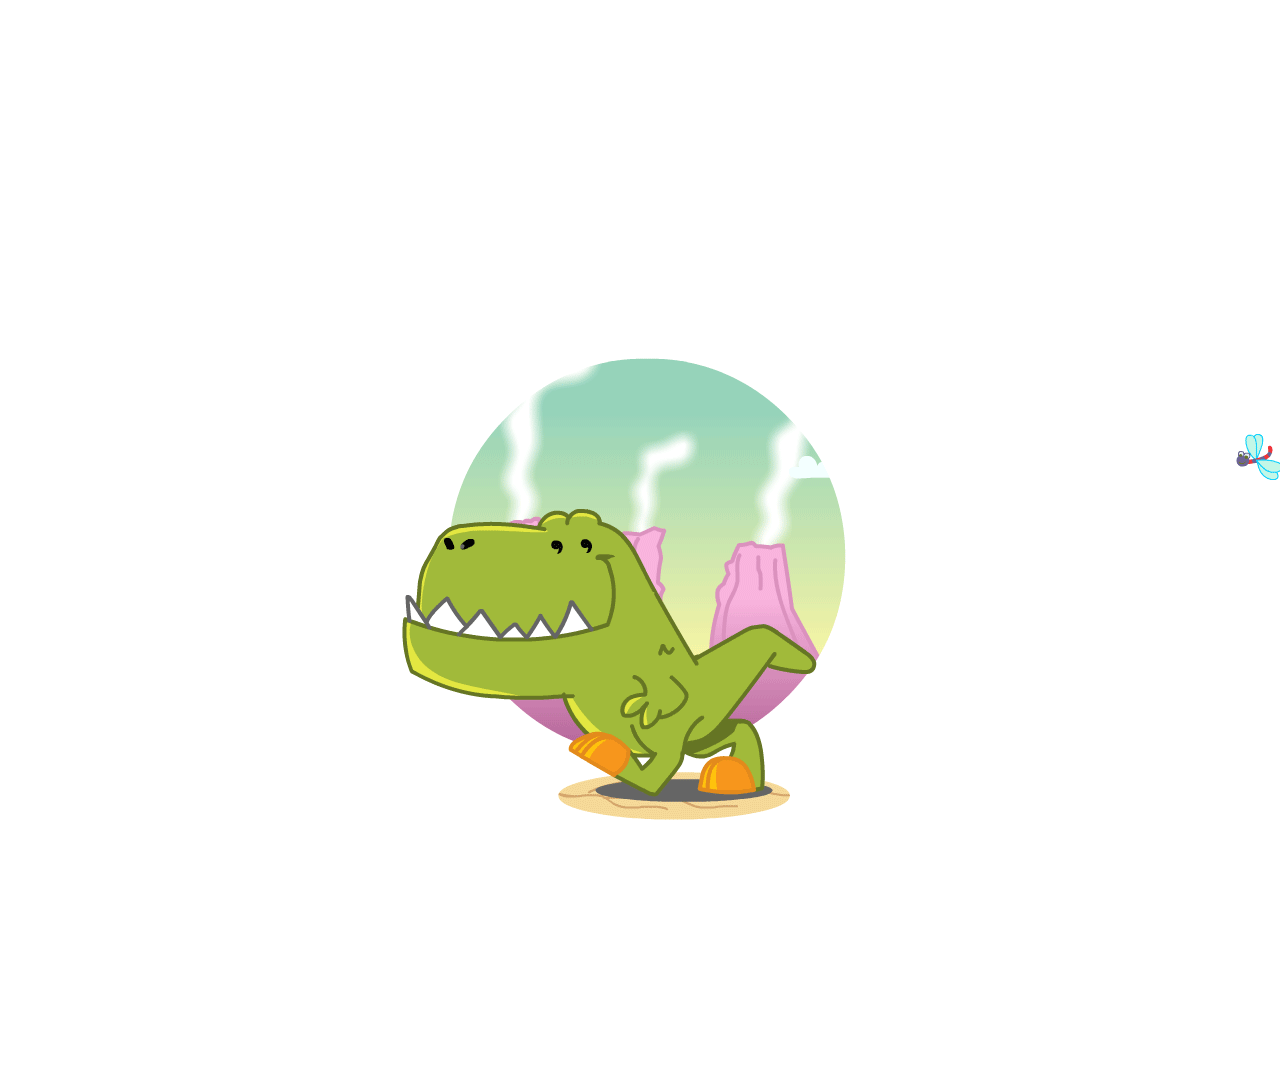 Dino animation cartoon graphic design illustration